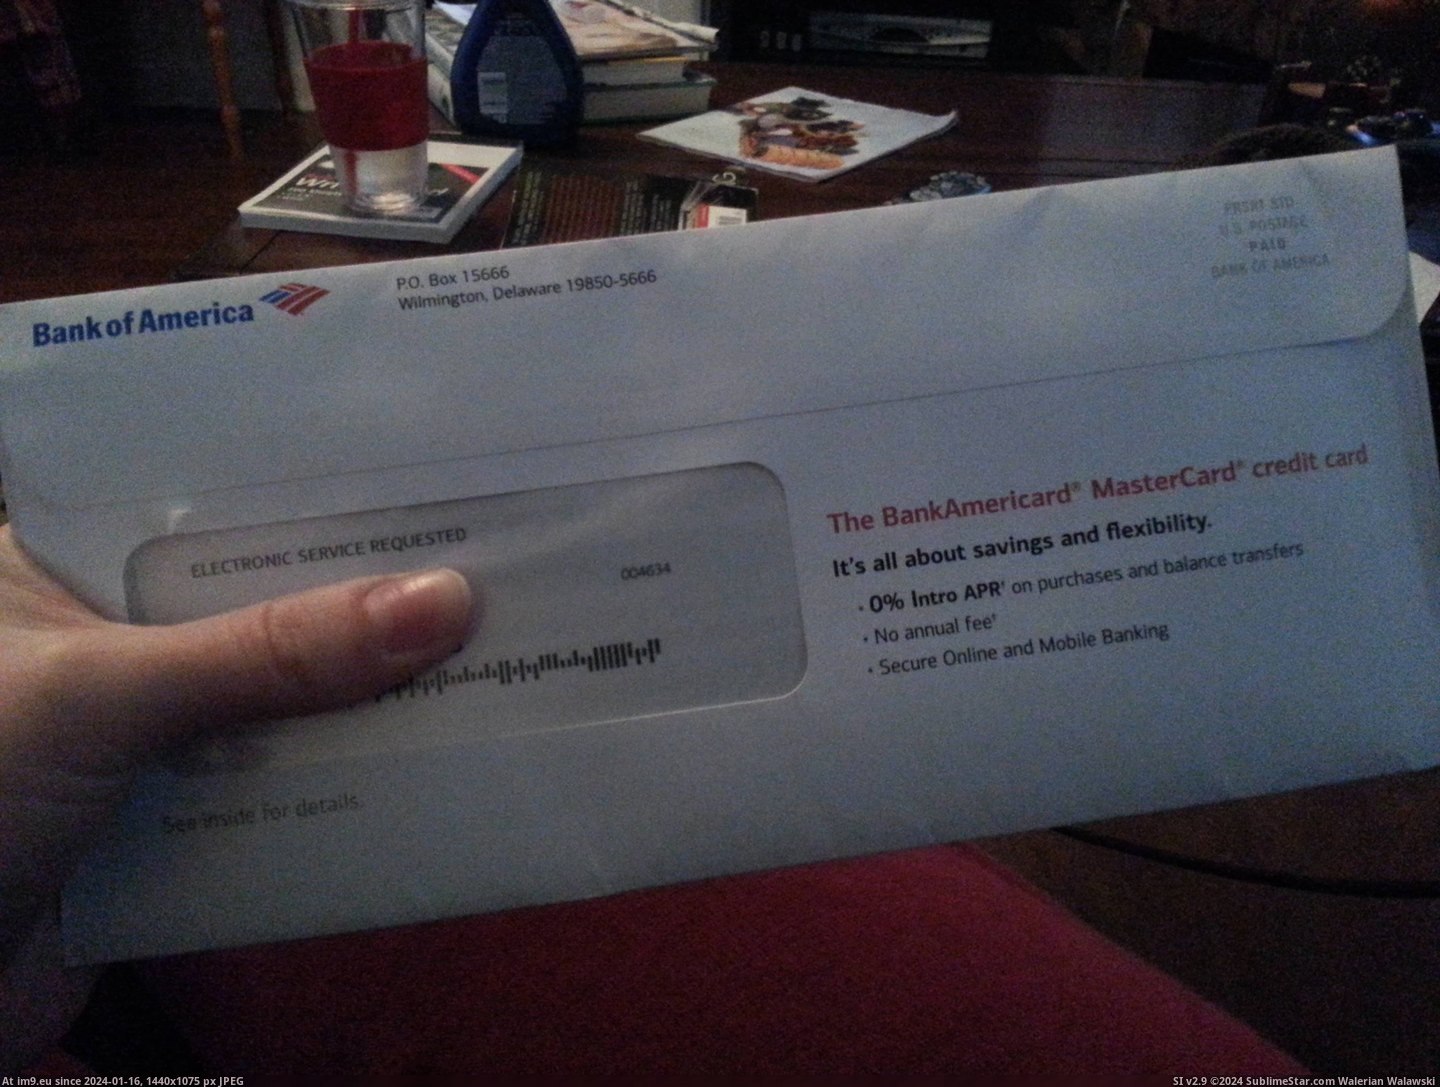 #Front #Flap #Envelope [Mildlyinteresting] This envelope flap is on the front instead of the back. Pic. (Изображение из альбом My r/MILDLYINTERESTING favs))